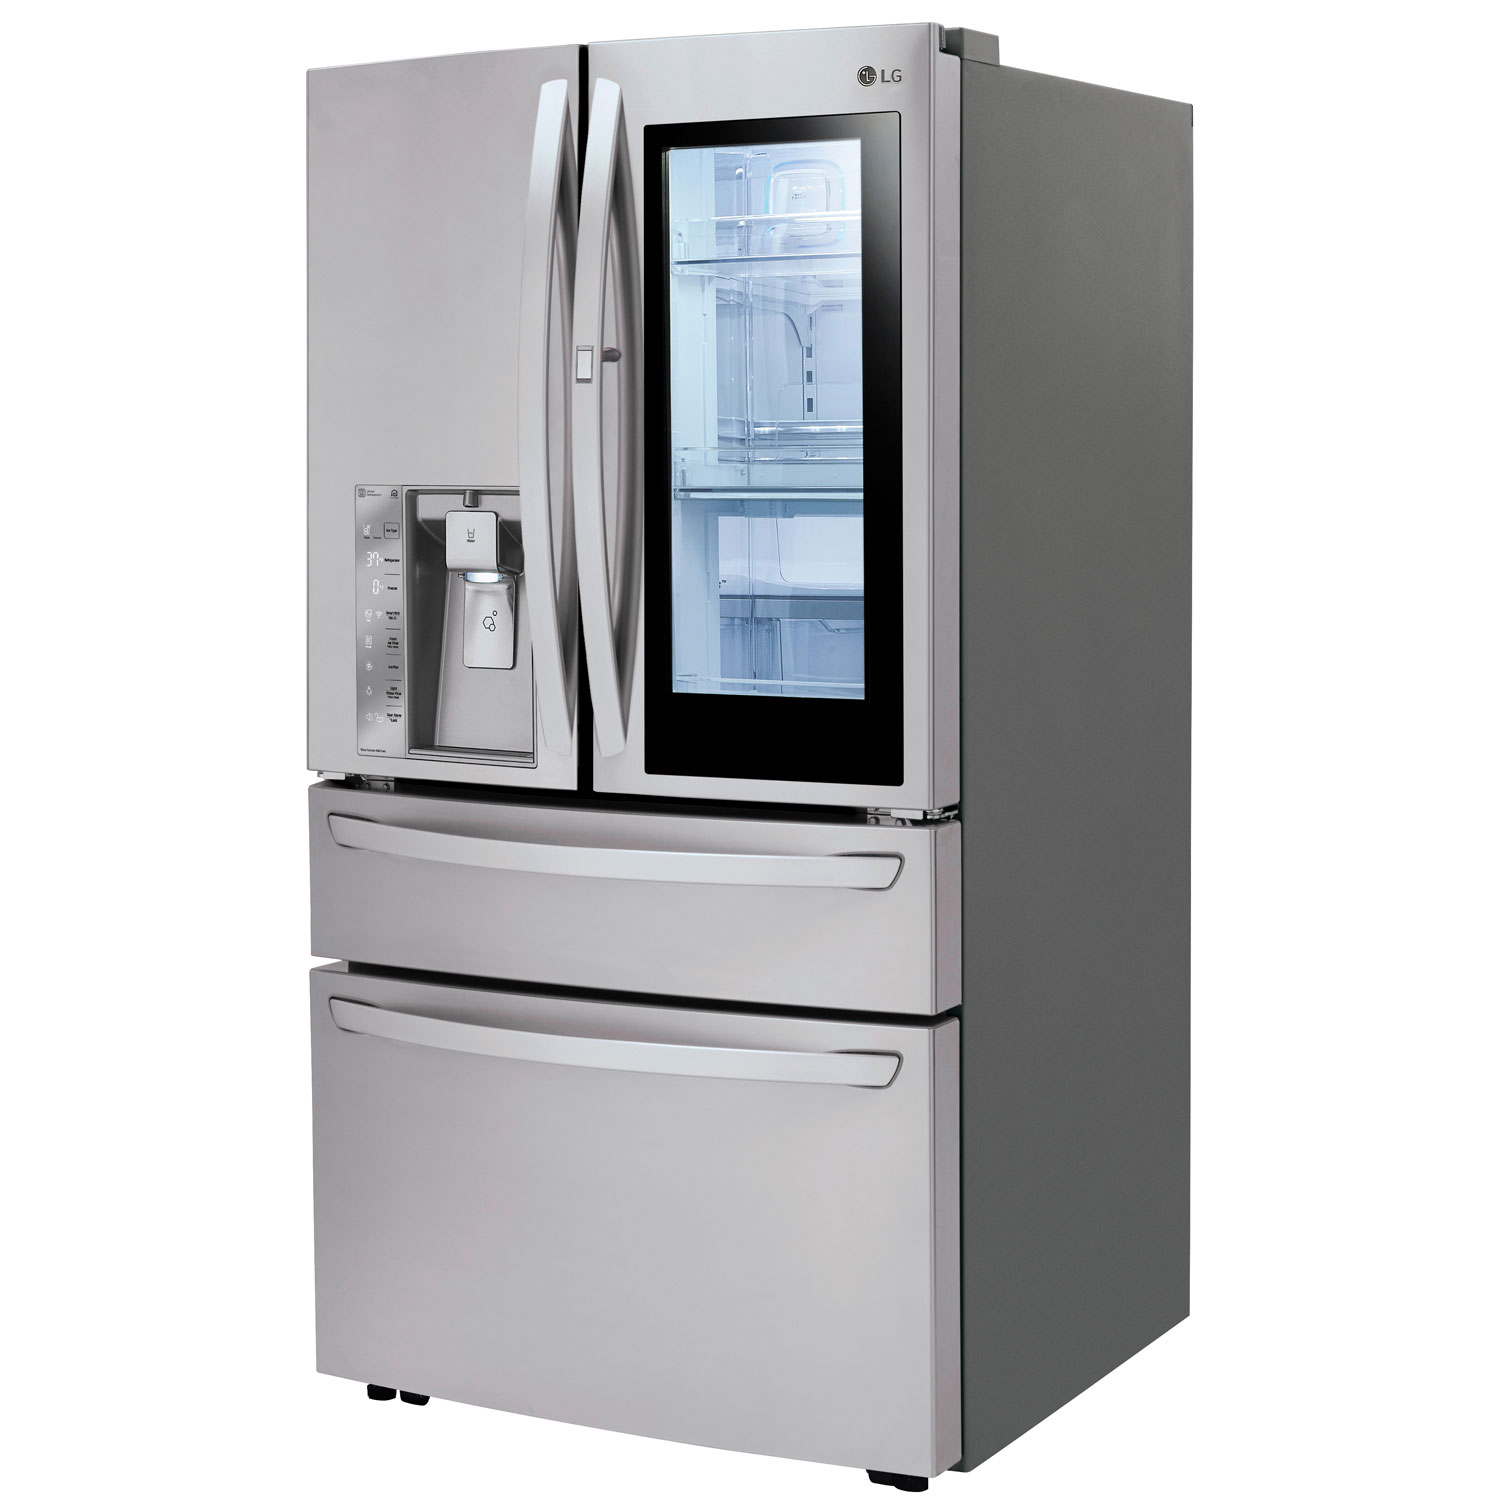 LG InstaView refrigerator 